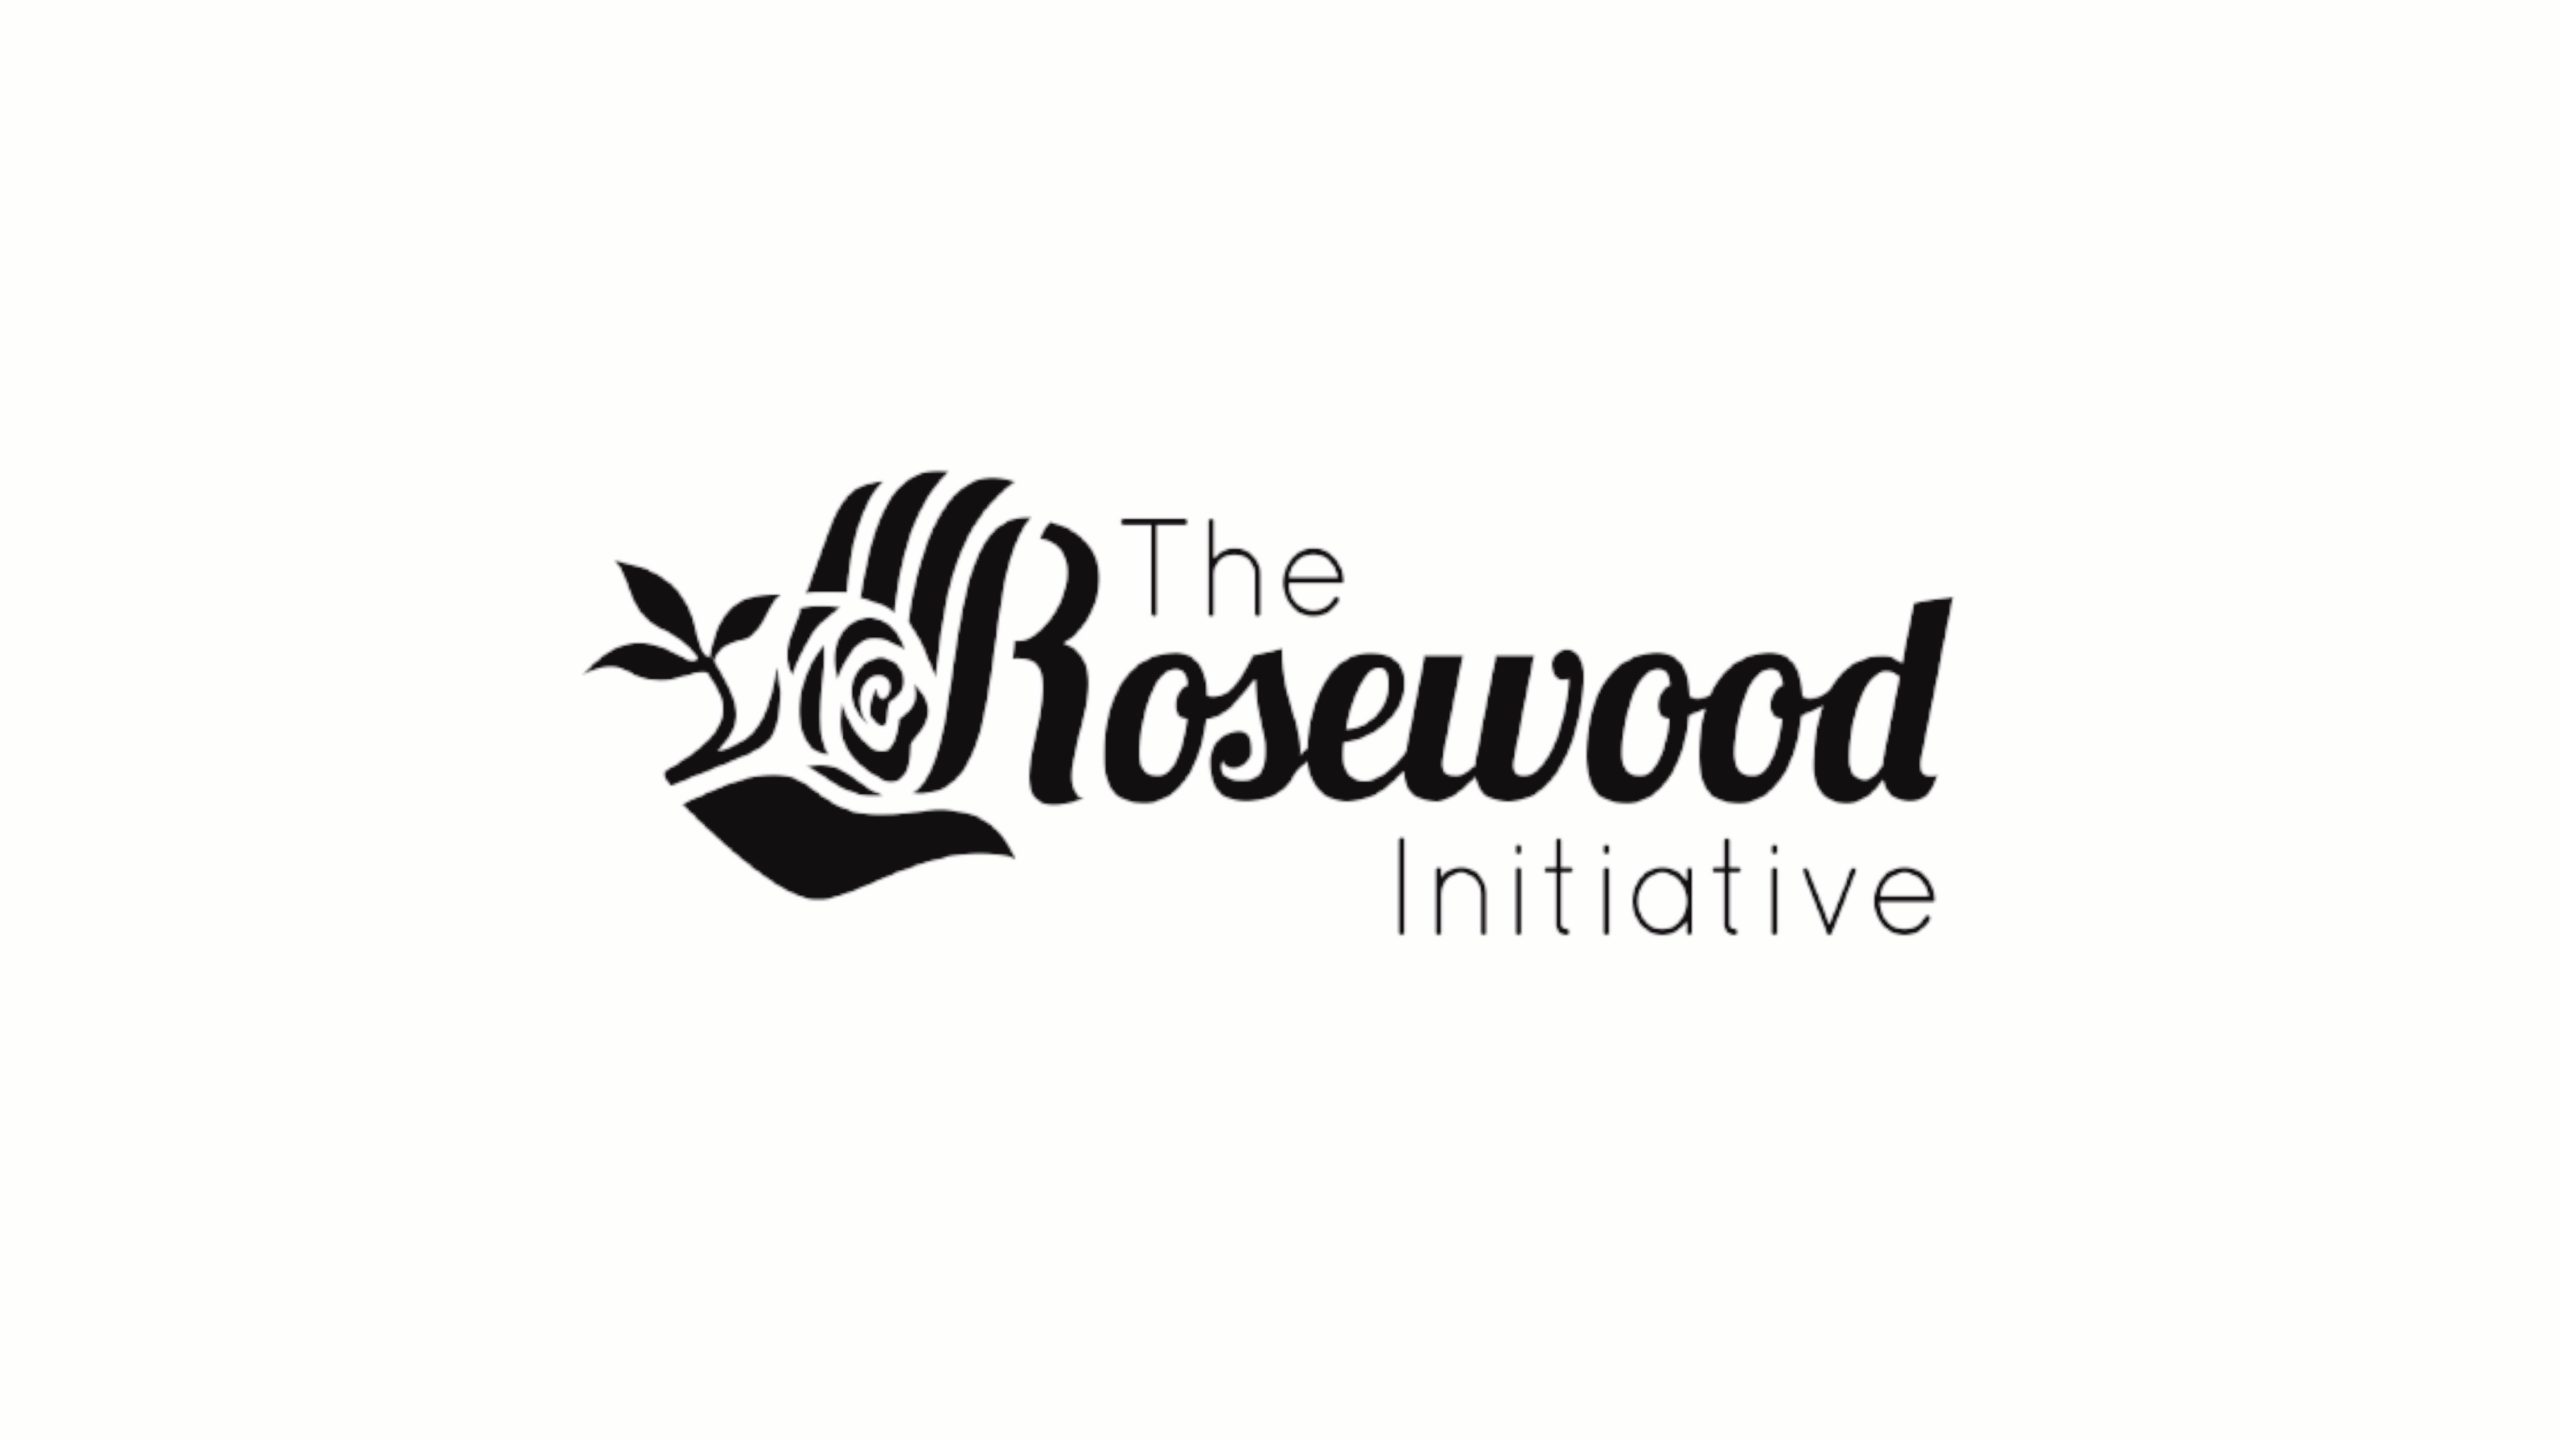 Rosewood Initiative